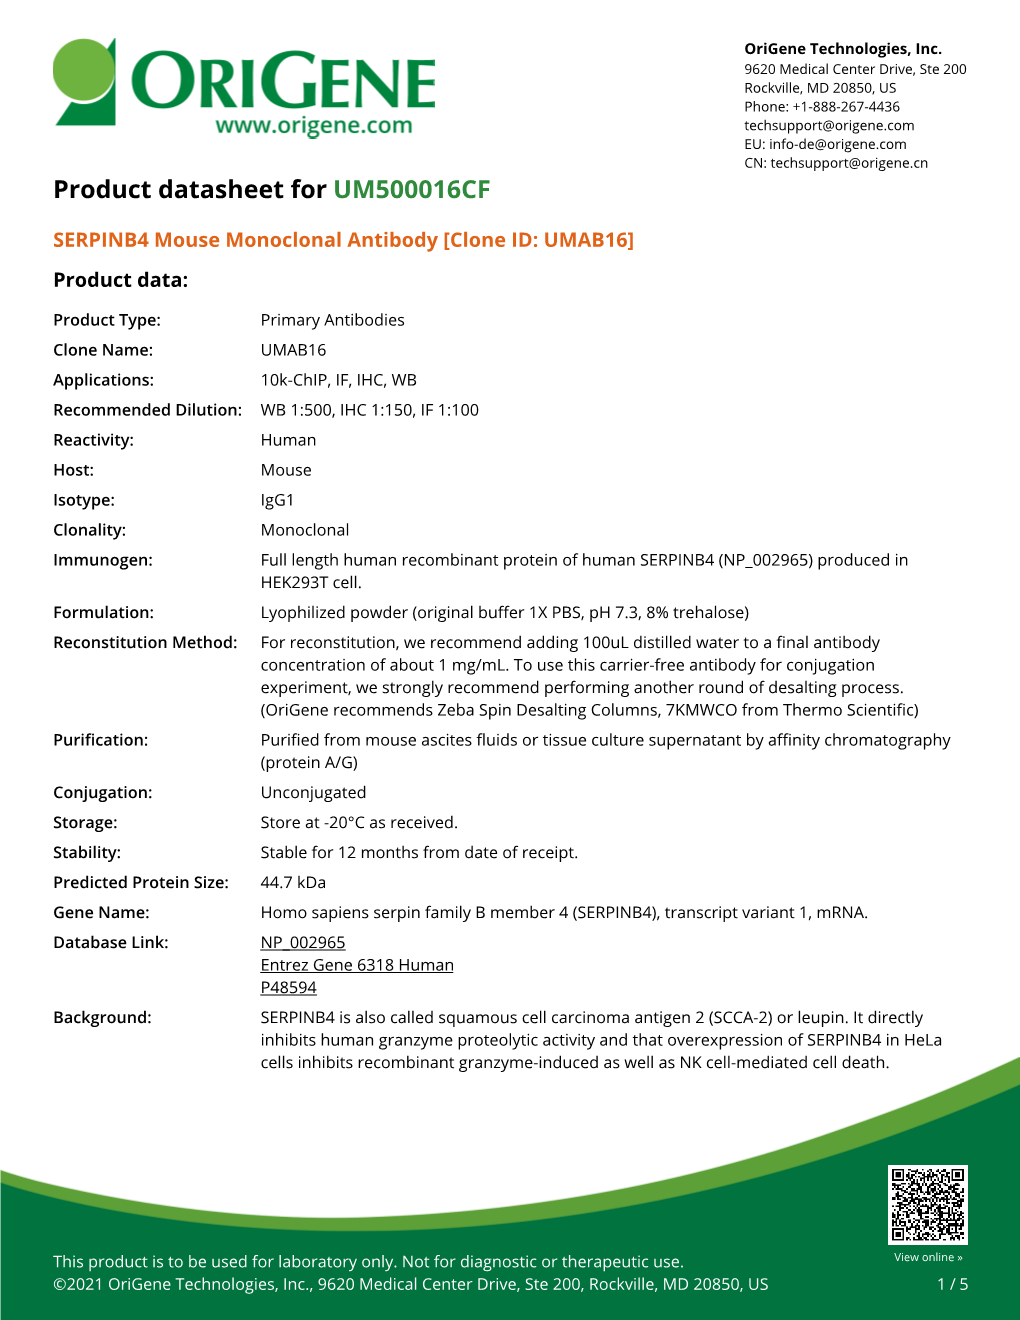 SERPINB4 Mouse Monoclonal Antibody [Clone ID: UMAB16] Product Data